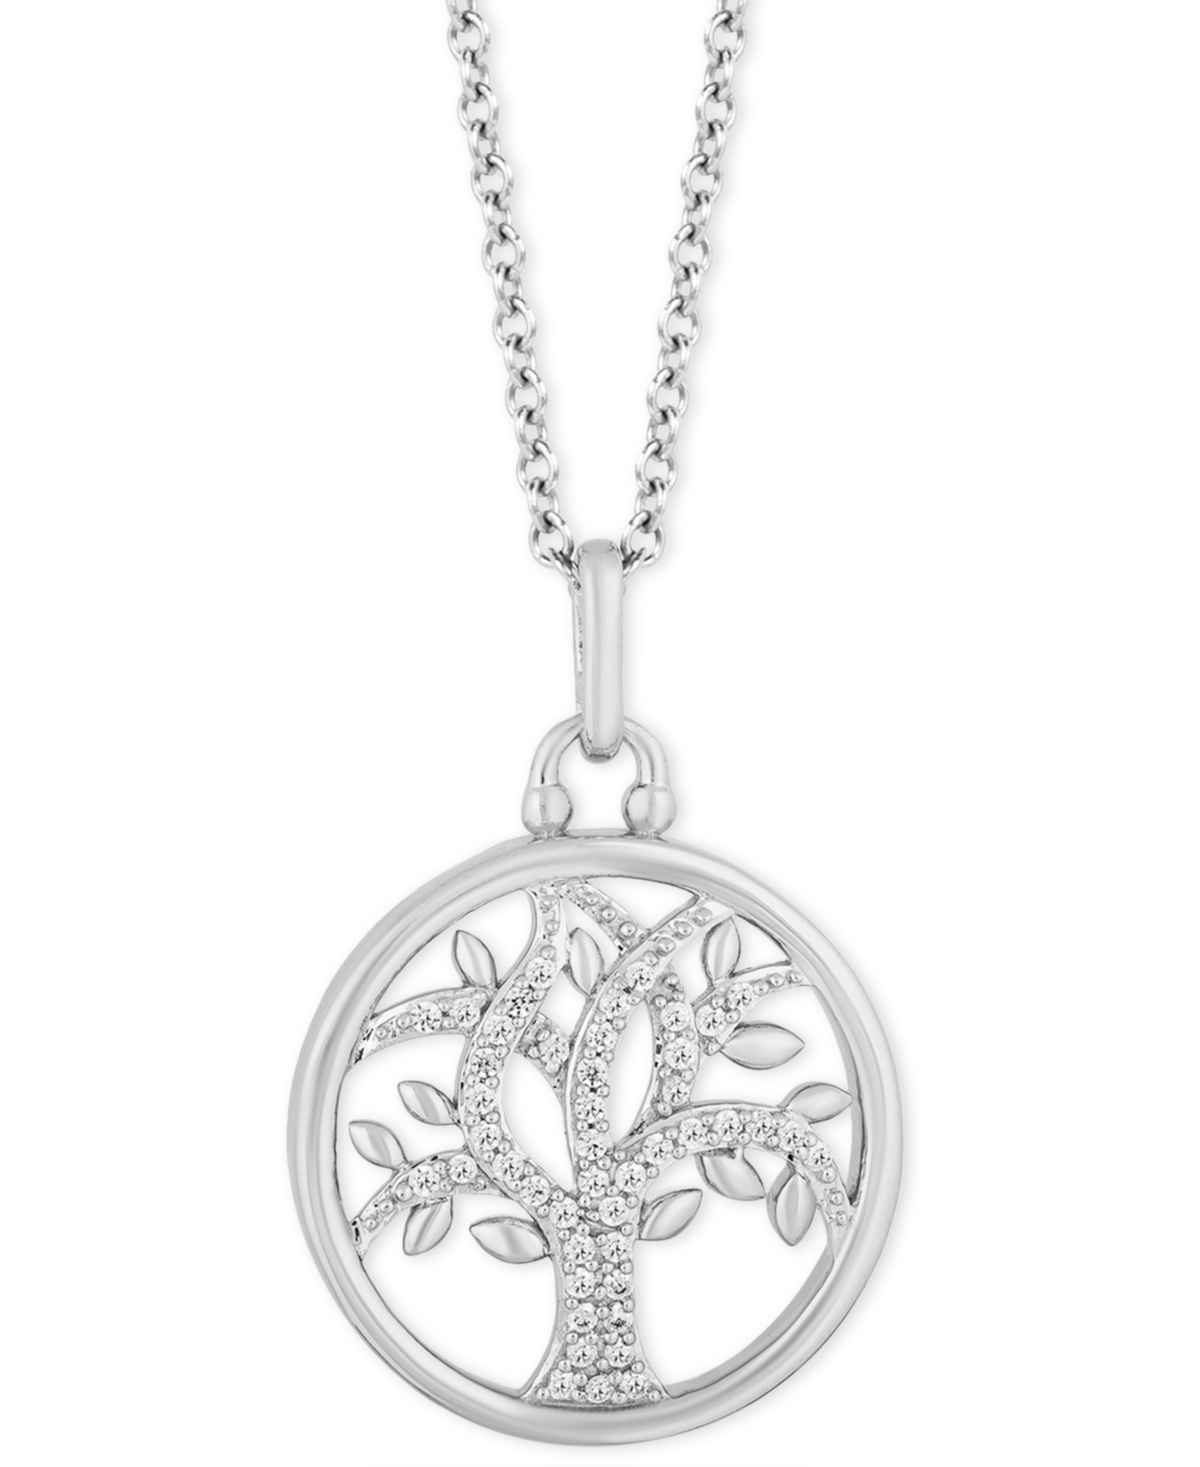 Hallmark Diamonds Tokens by Hallmark Diamonds Family Tree Strength pendant (1/6 ct. t.w.) in Sterling Silver, 16" + 2" extender